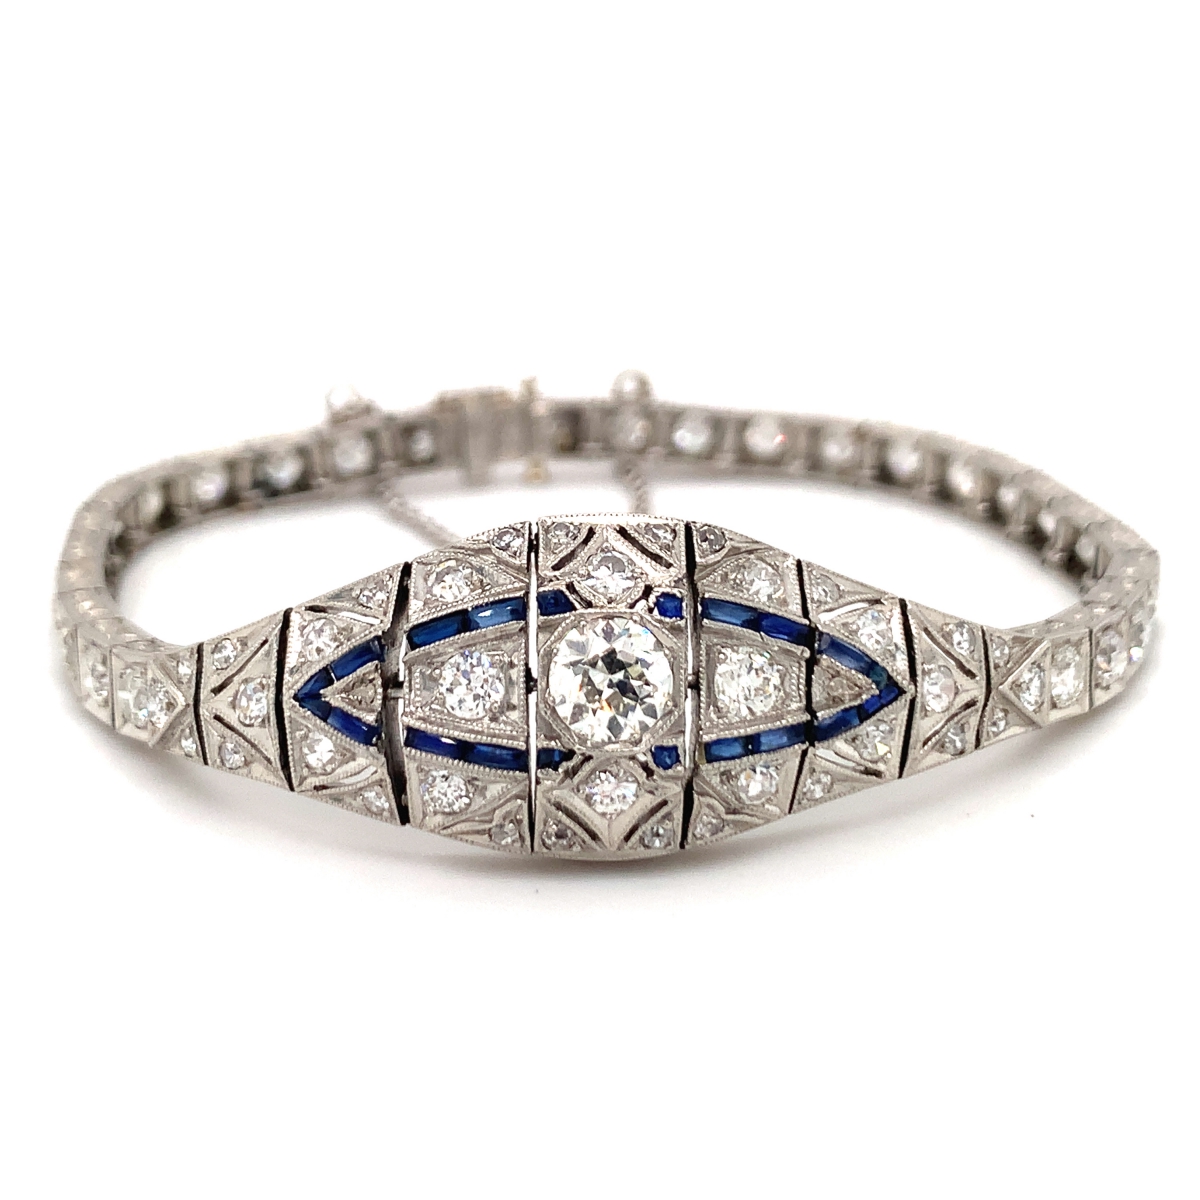 Stunning French Art Deco Platinum Diamond Bracelet | eBay